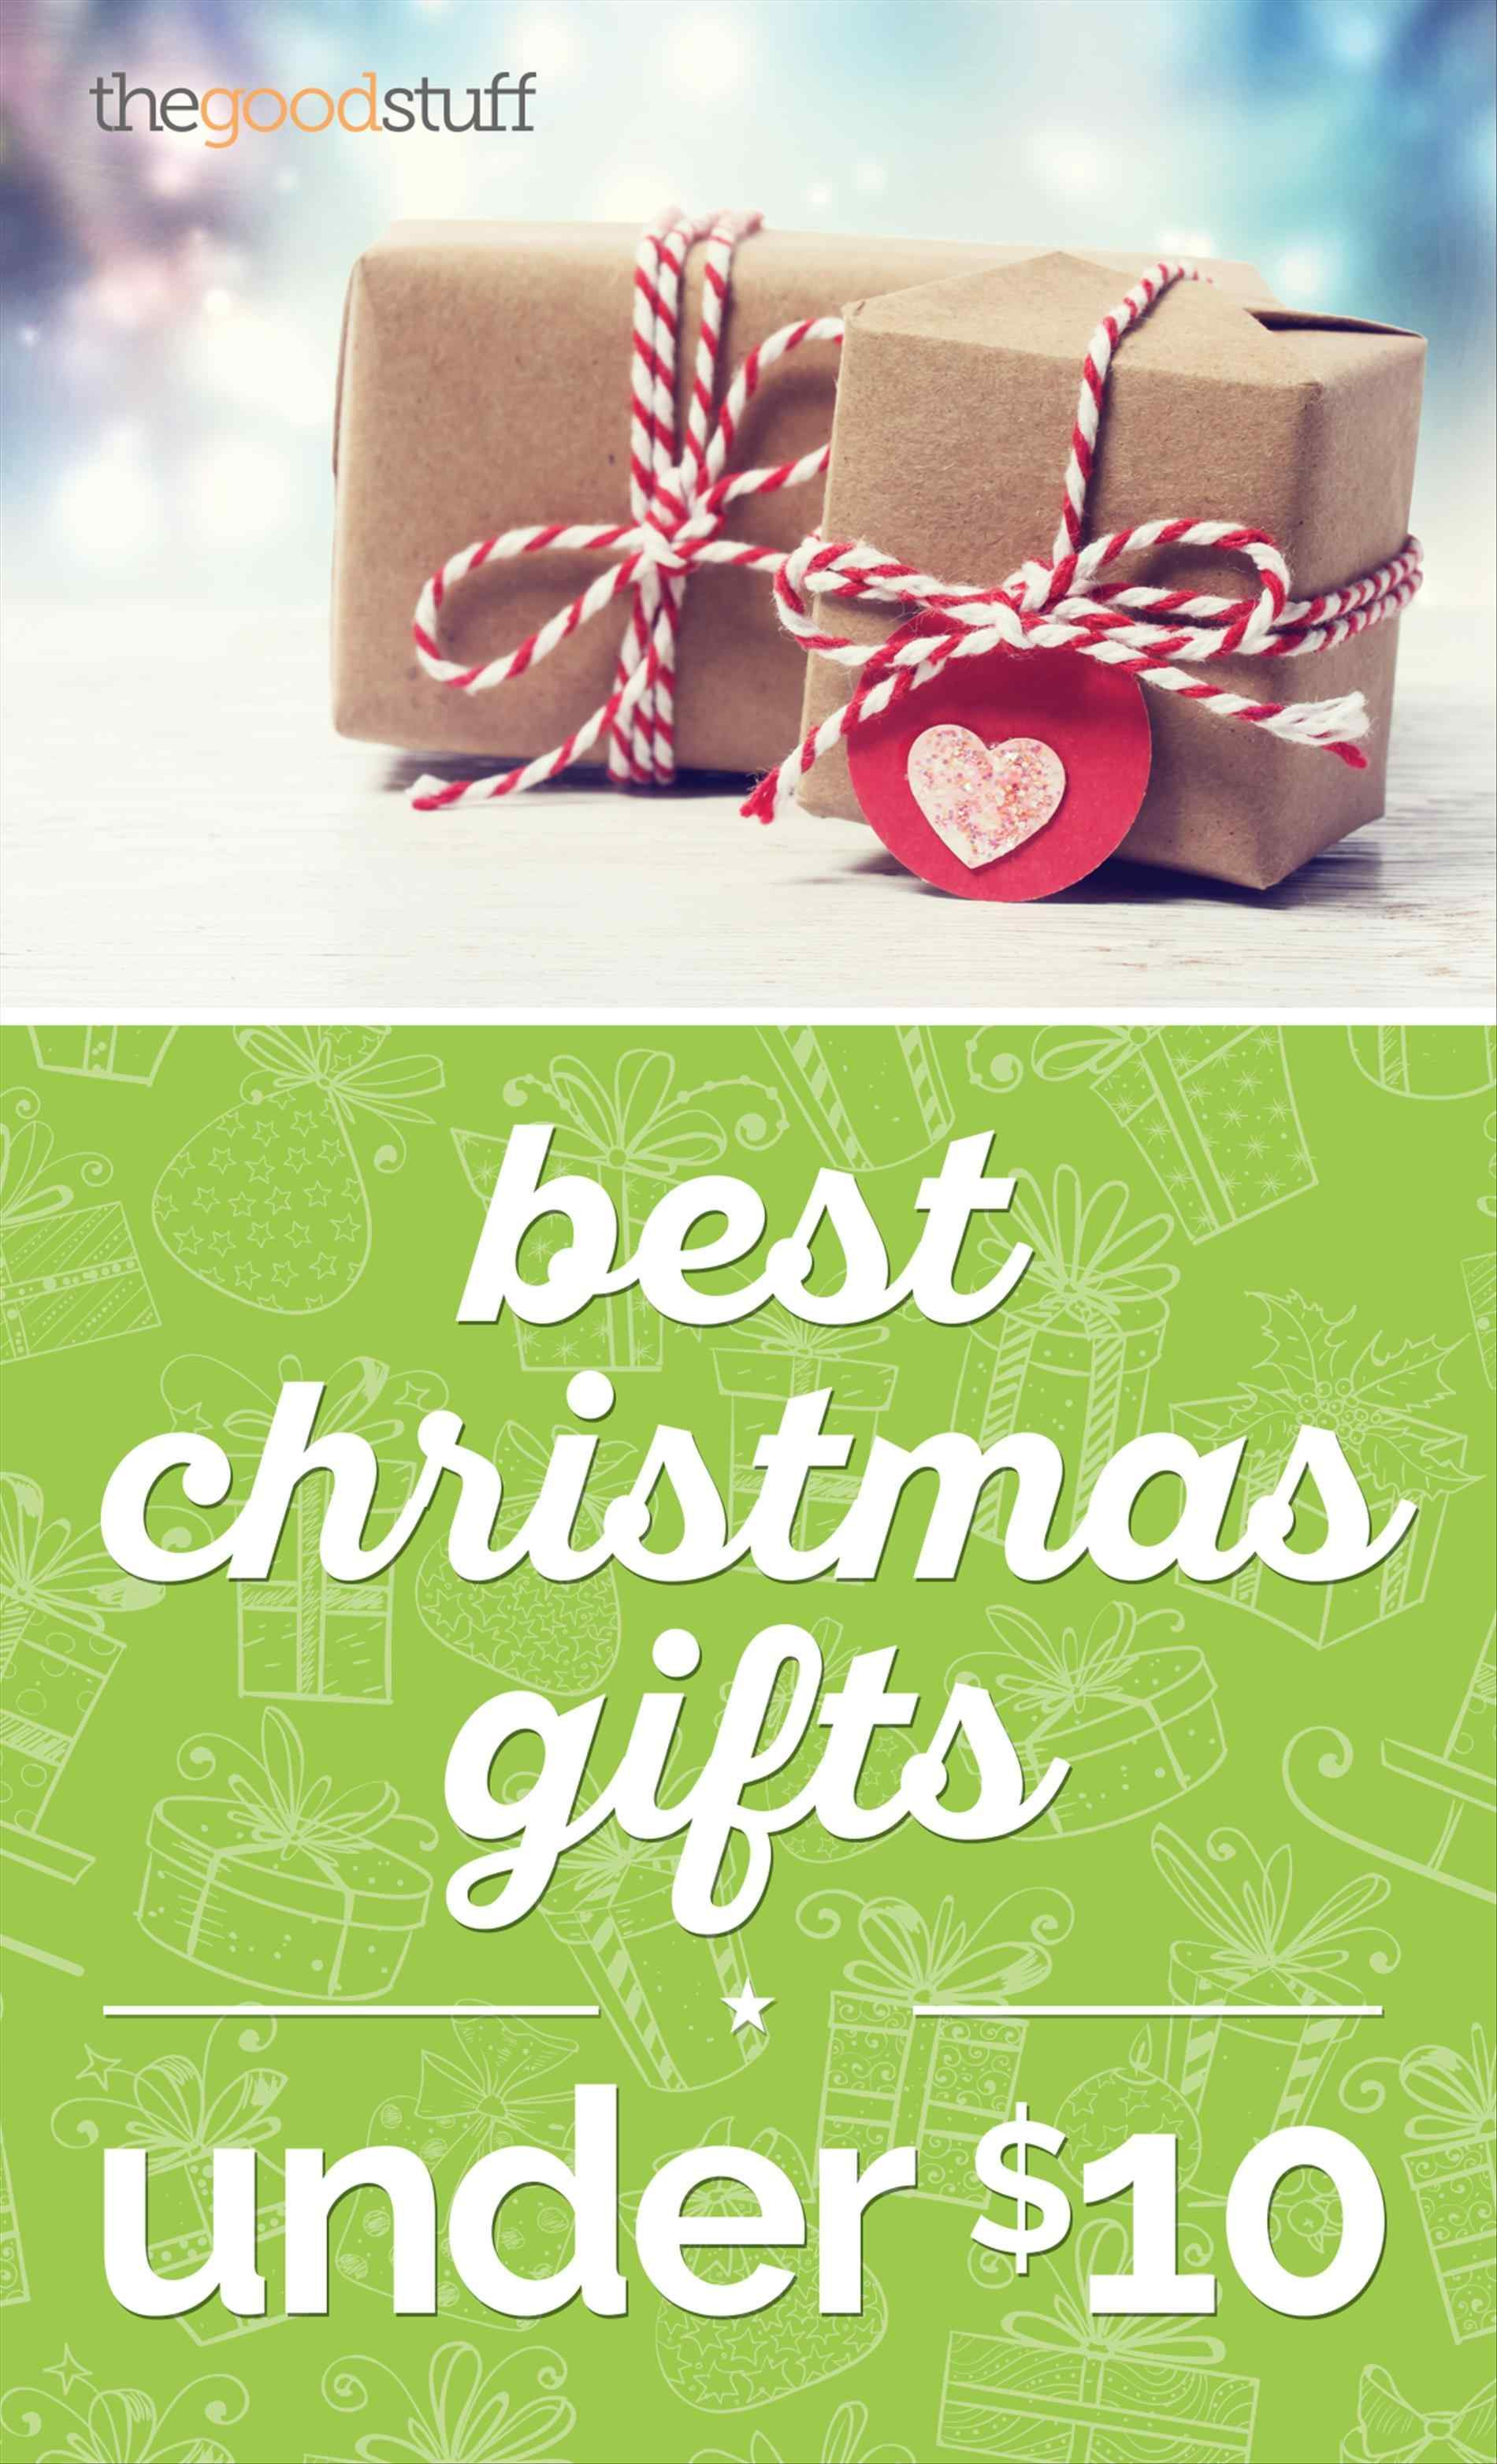 Employee Holiday Gift Ideas Under 20
 Employee Christmas Gift Ideas Under $10